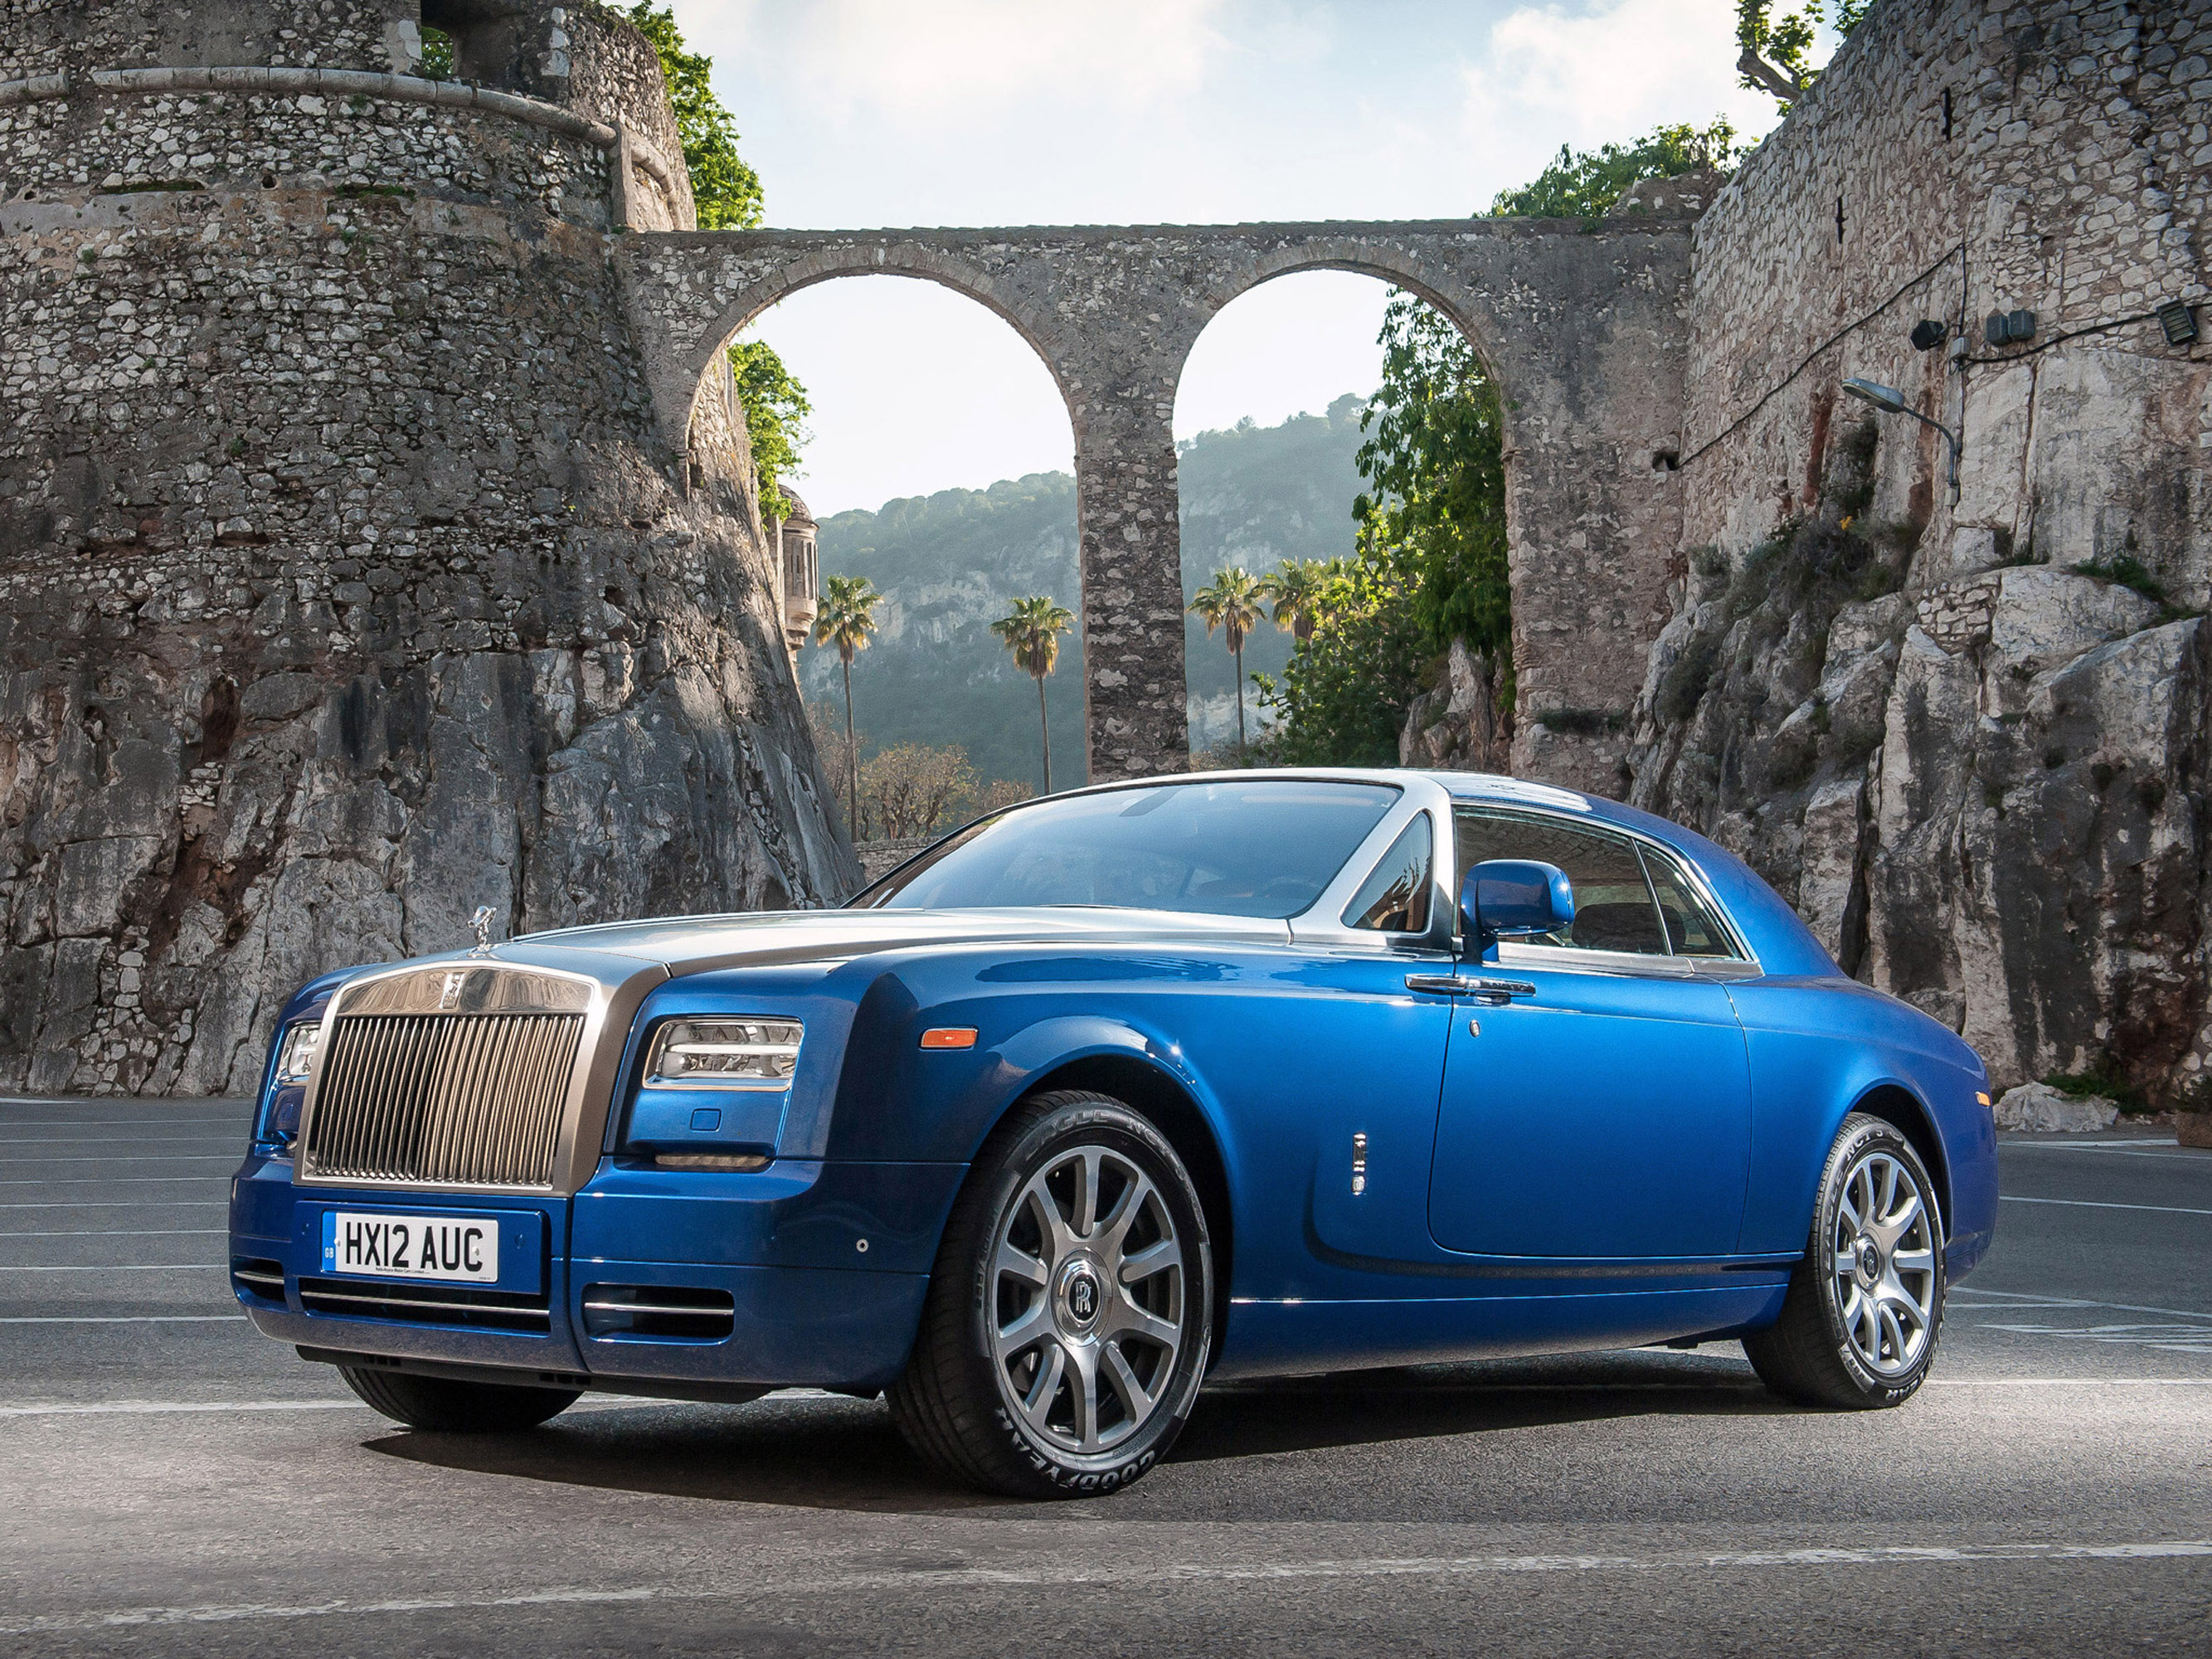 Роллс ройс страна. Машина Rolls Royce Phantom. Роллс Ройс купе. Rolls Royce Phantom Coupe 2012. Rolls Royce Phantom купе.